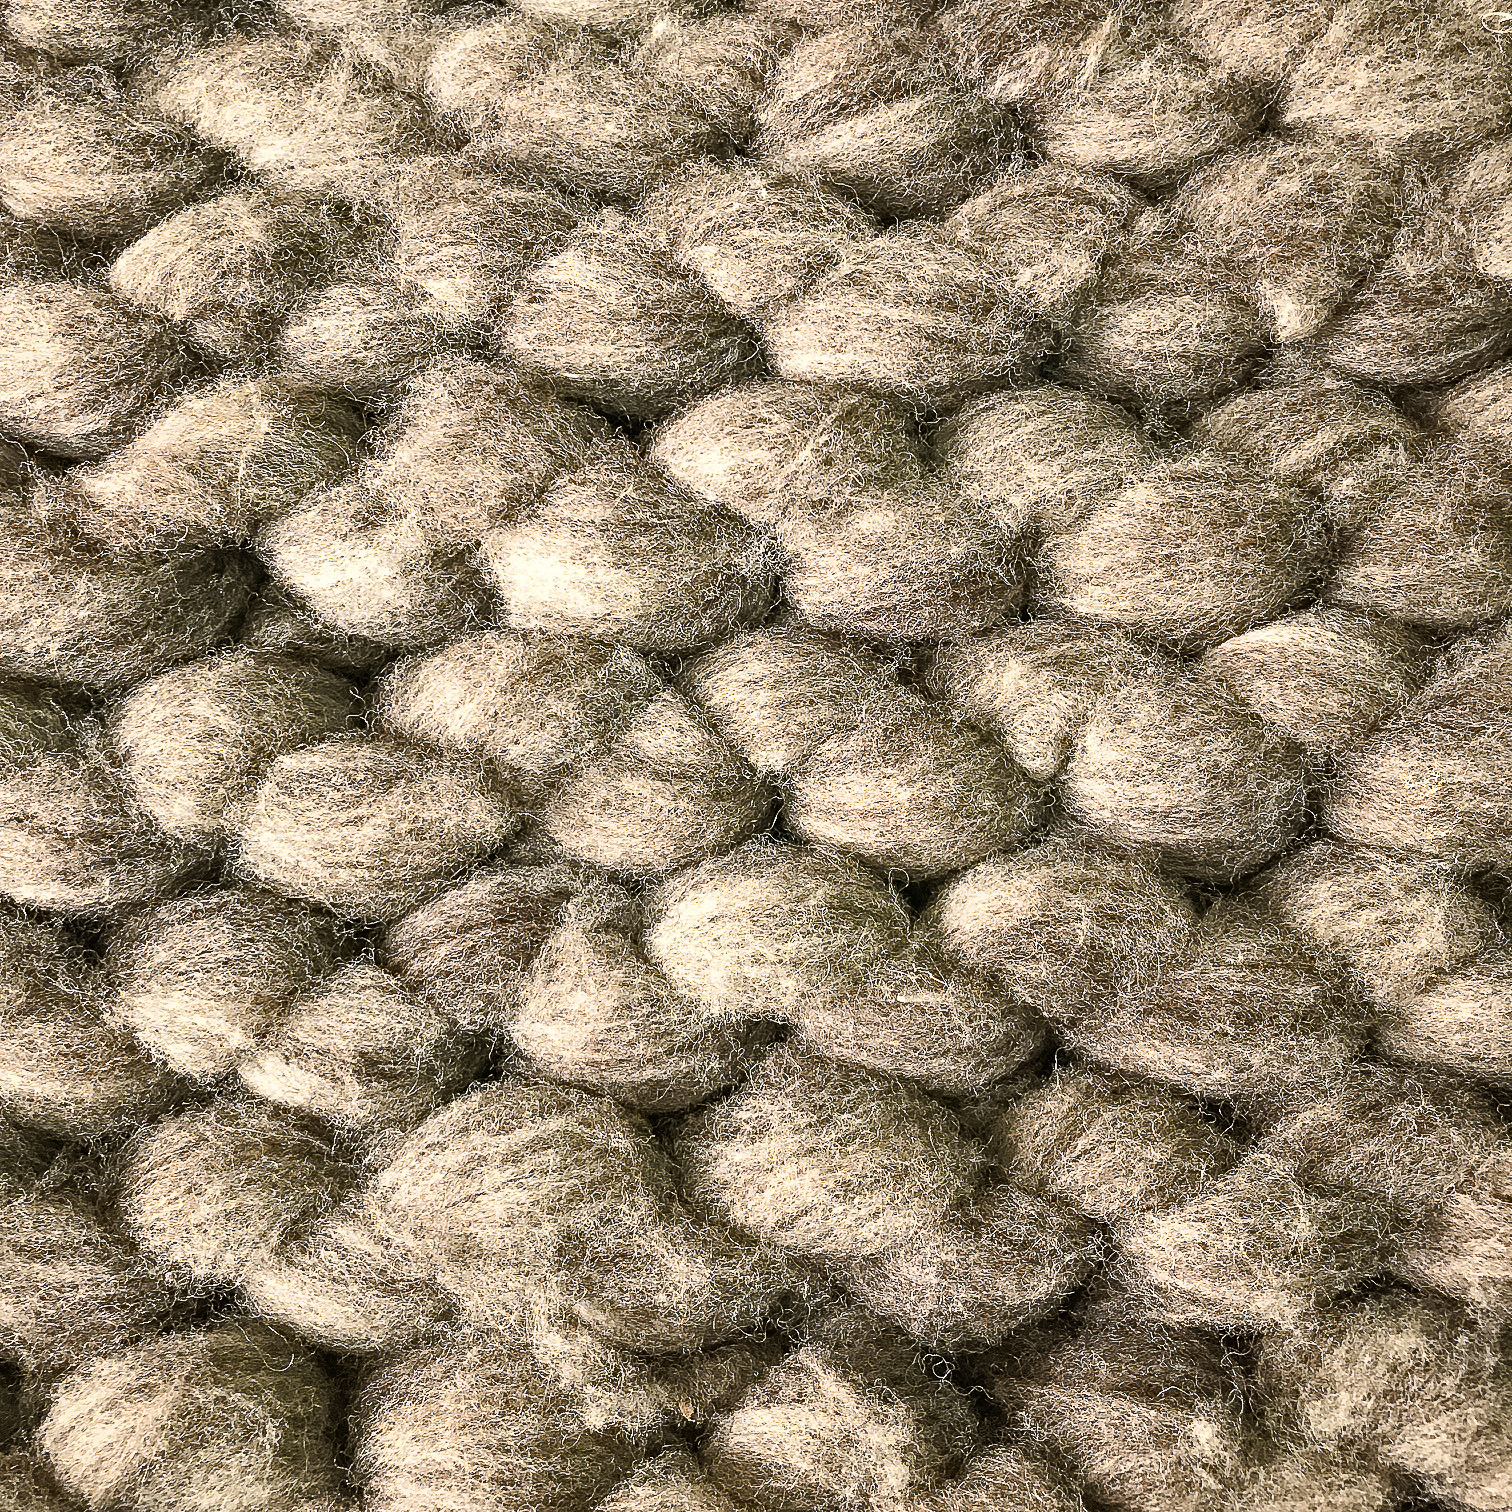 One Square Meter of wool